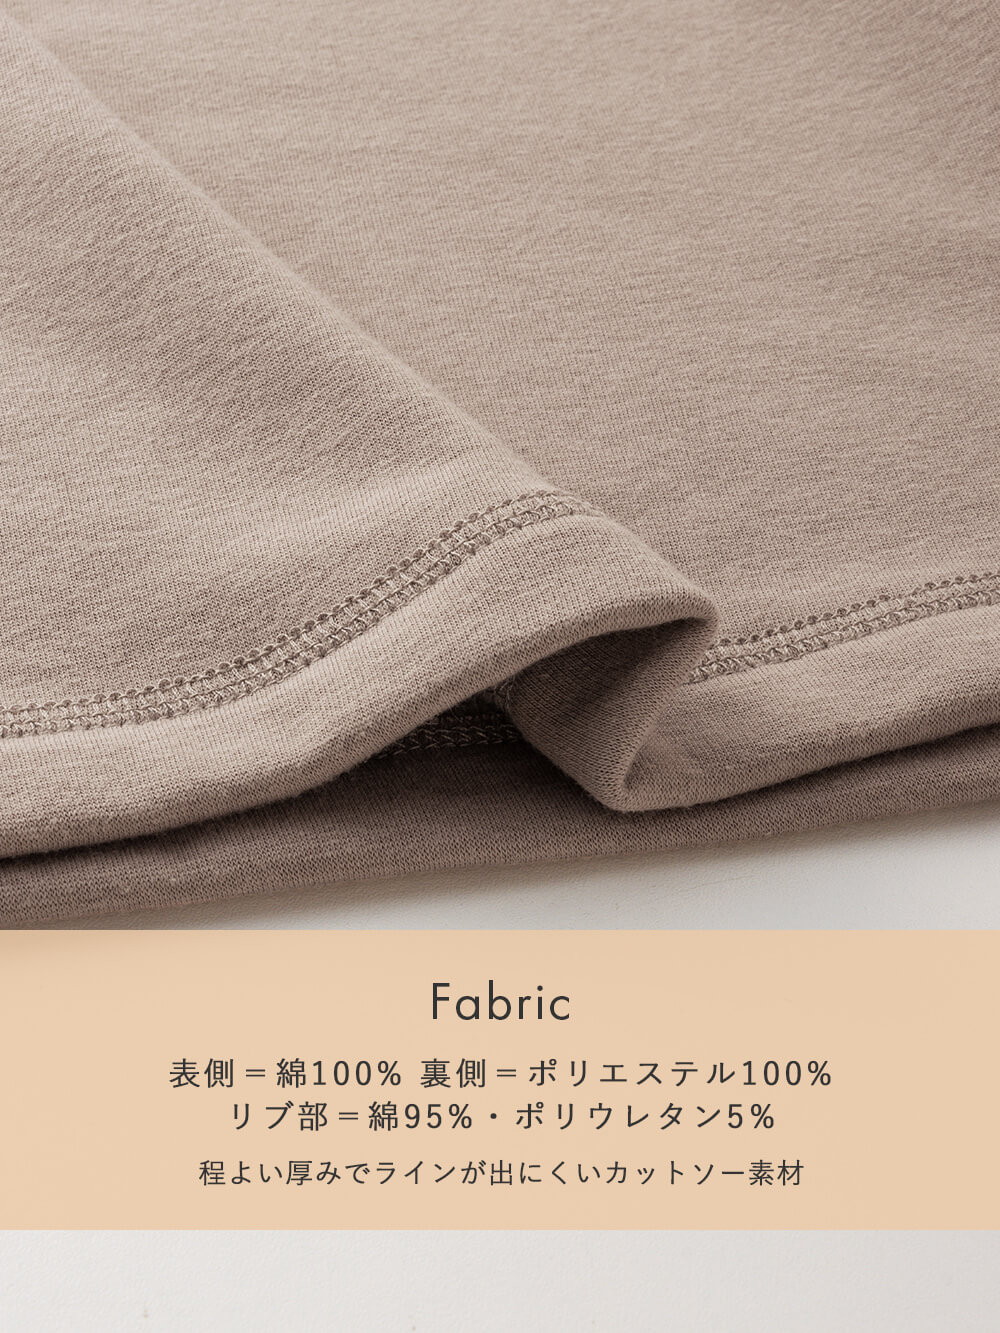 Fabric Size